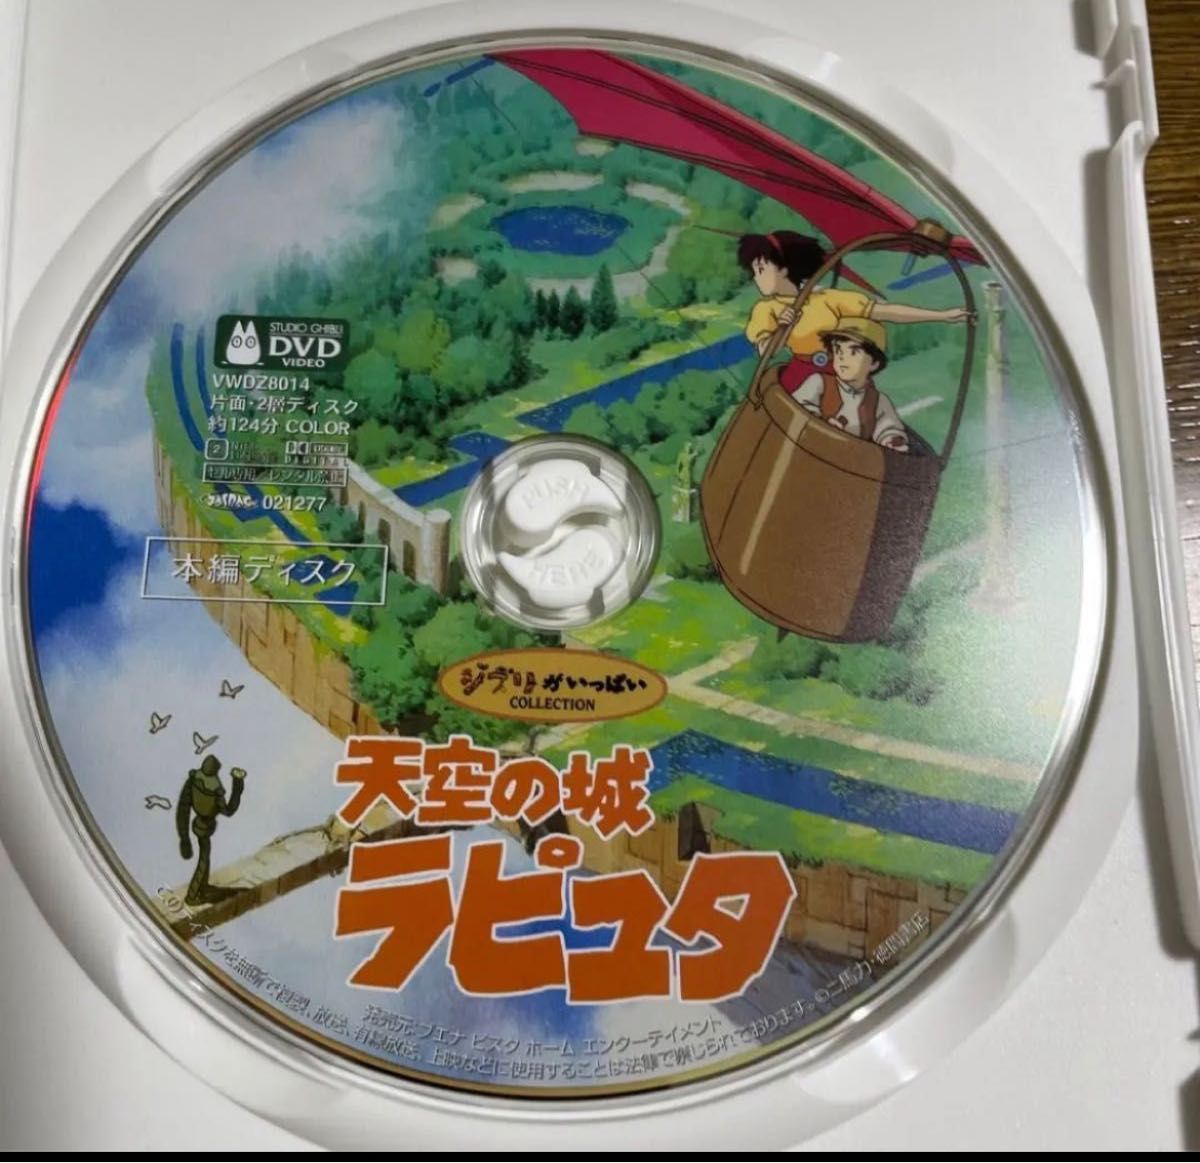 DVD。フォロ割200円引きします。相談で200円引き受けます。商品説明にお得情報？天空の城ラピュタ